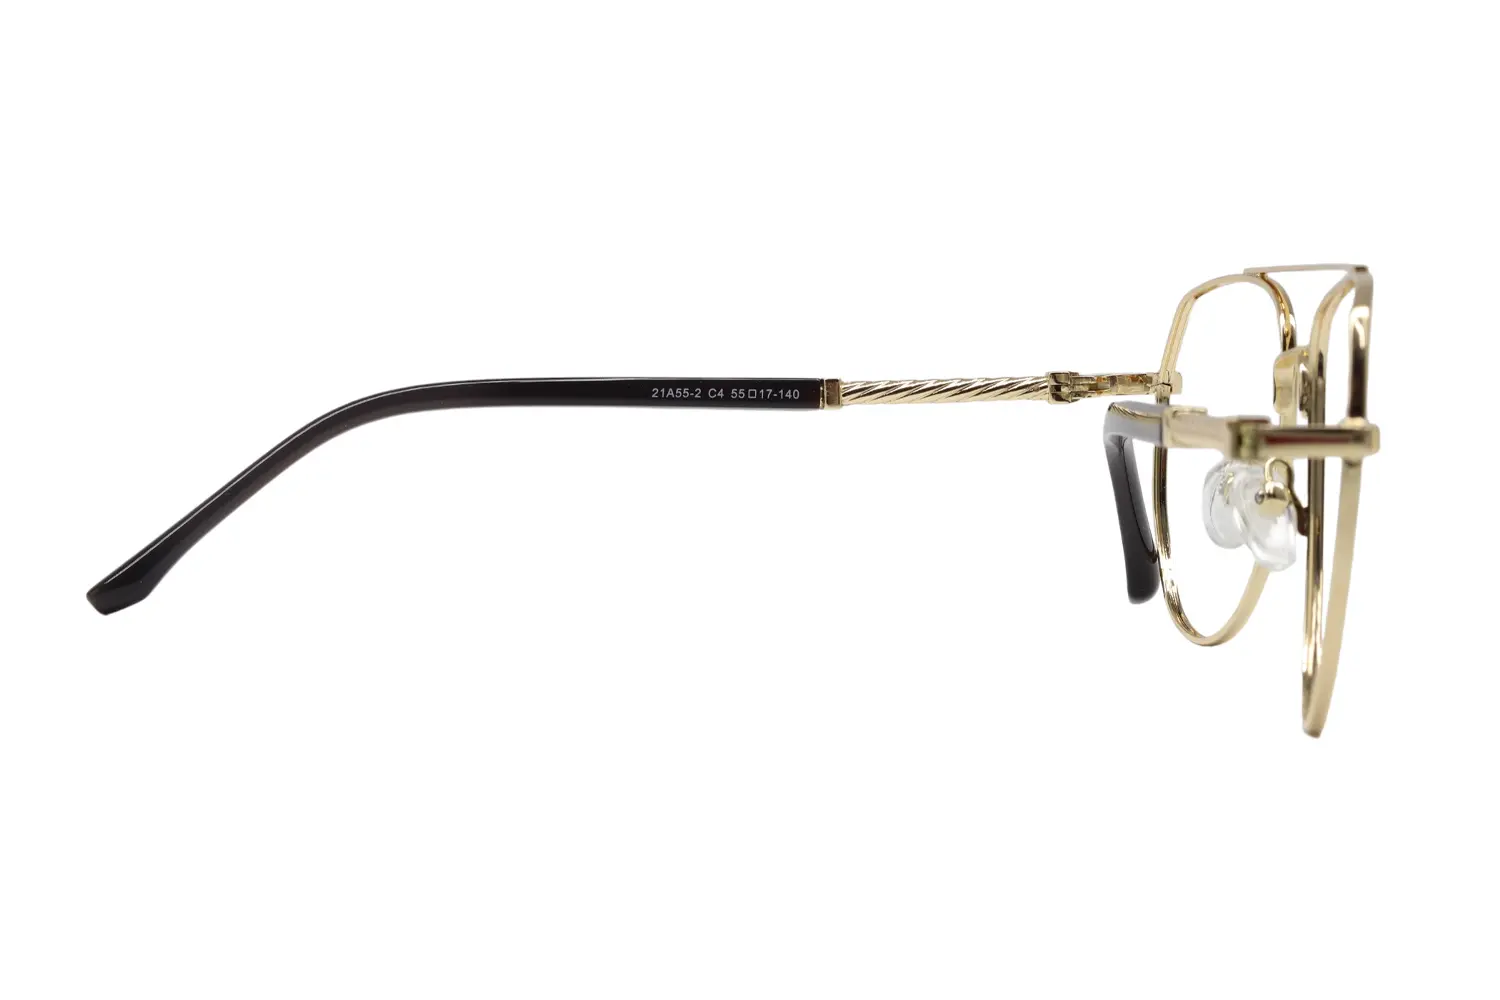 عینک طبی CHARRIOL مدل21A55- 2 C4 - دکترعینک